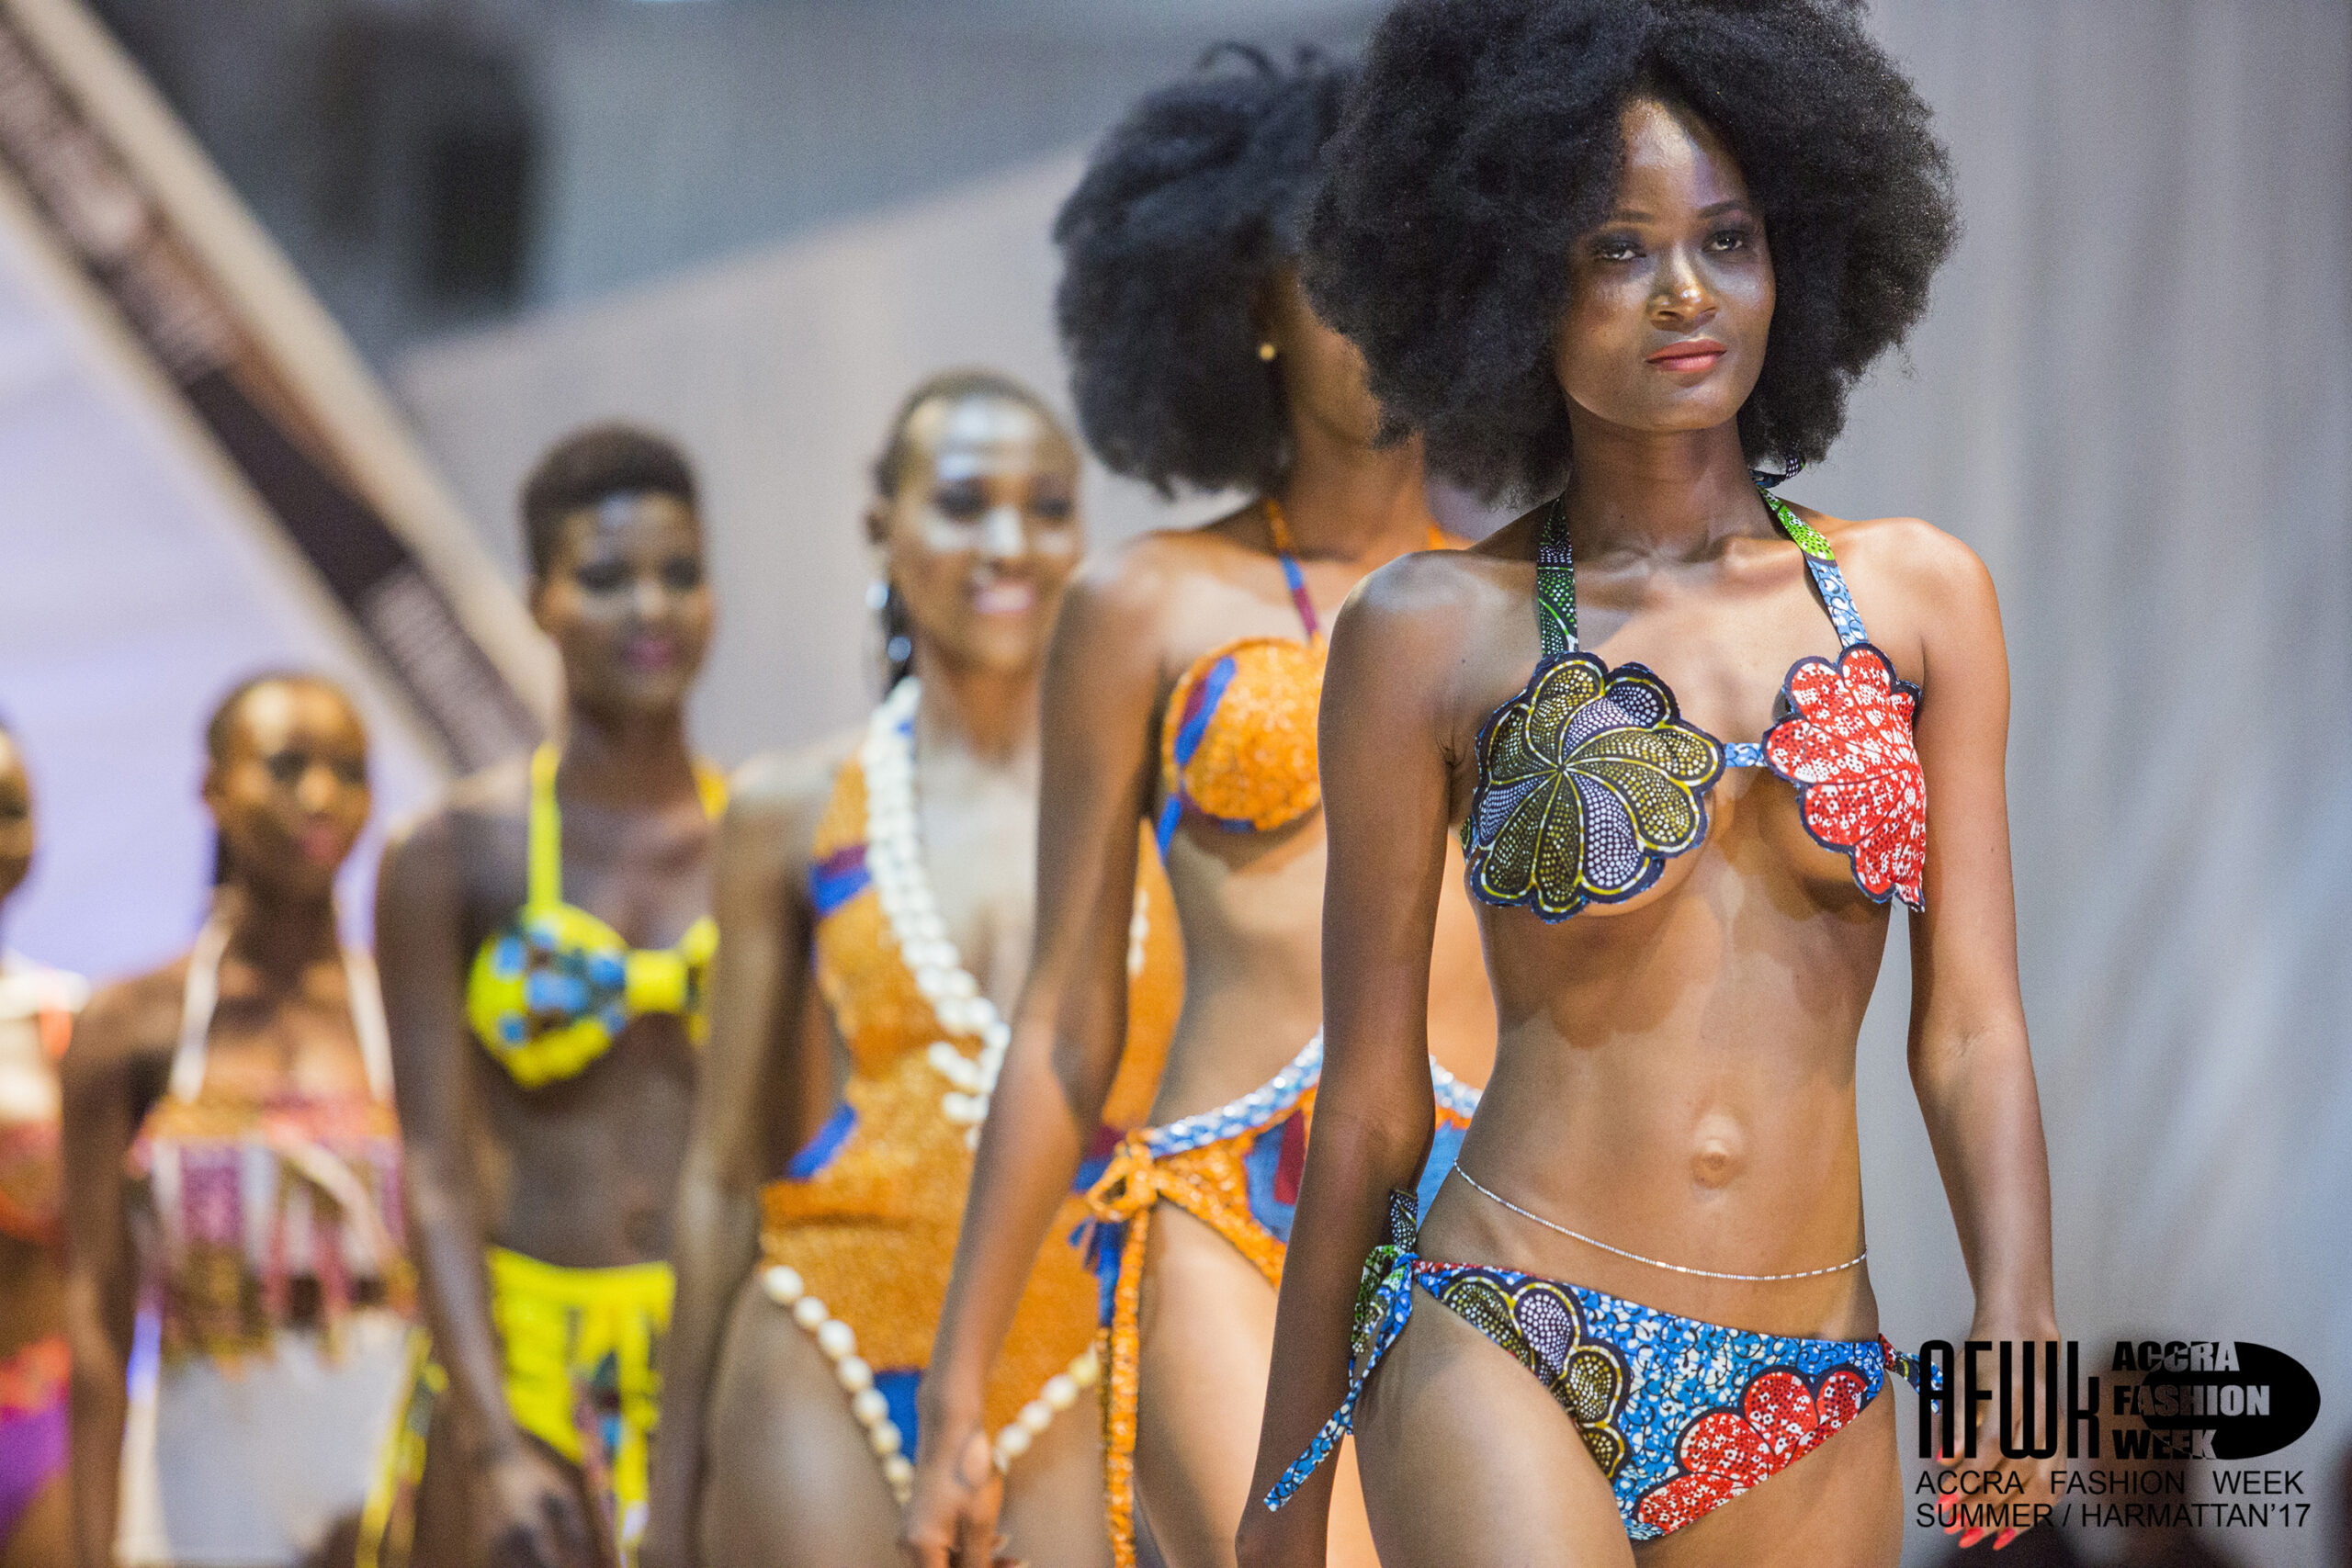 I Slay African (Ghana) @ Accra Fashion Week S/H17 Swimwear Deluxe Show